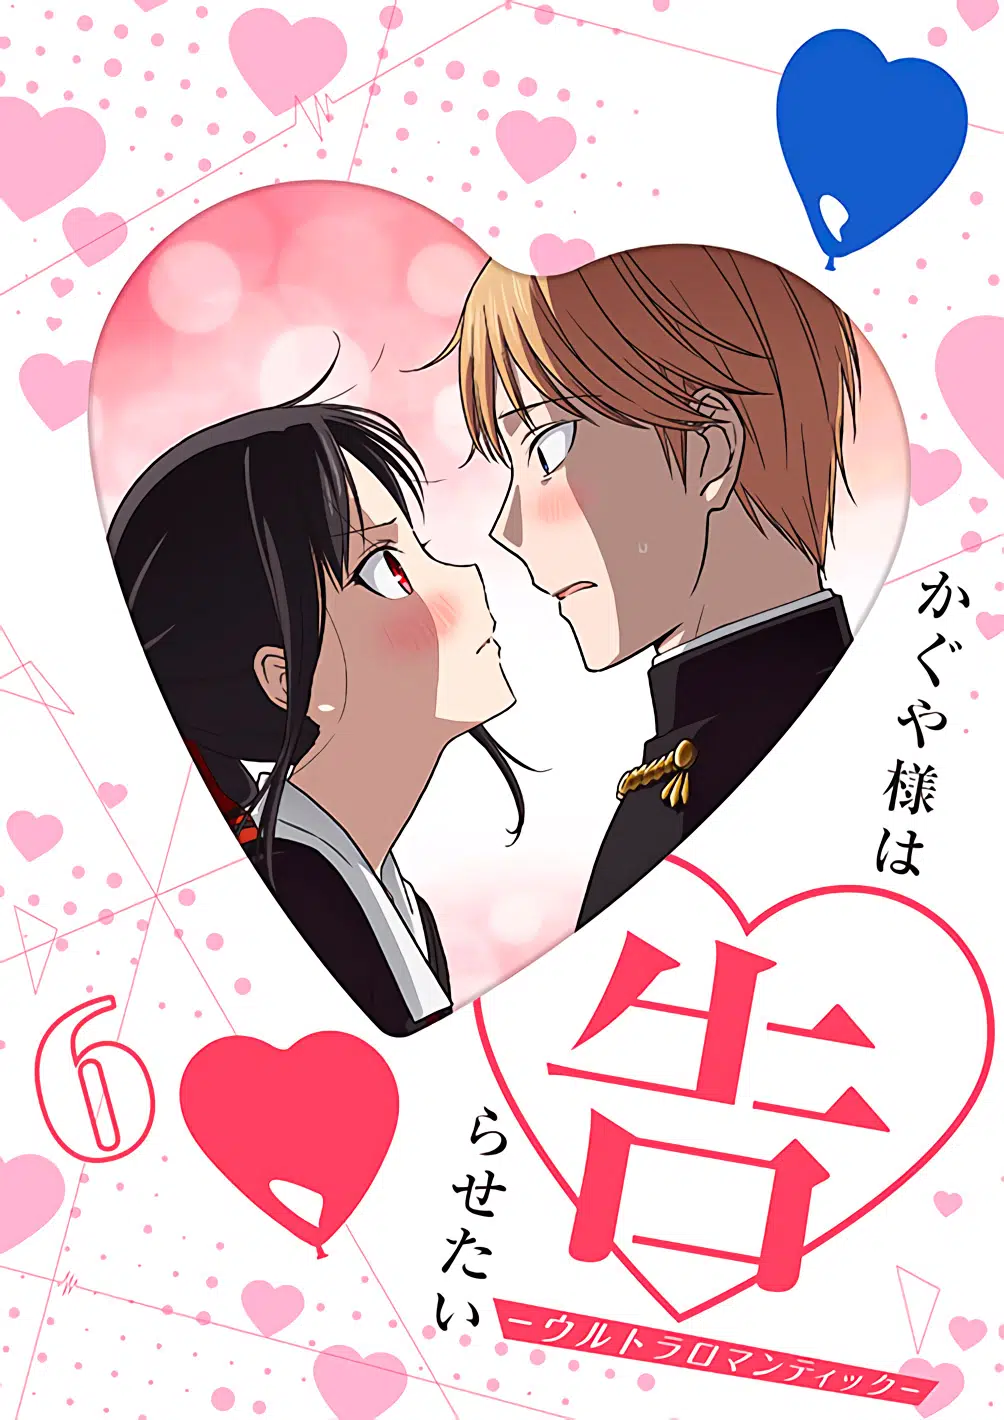 Kaguya-sama: Love is War 3 – Kaguya y Miyuki protagonizan la portada del 6° volumen Blu-Ray/DVD